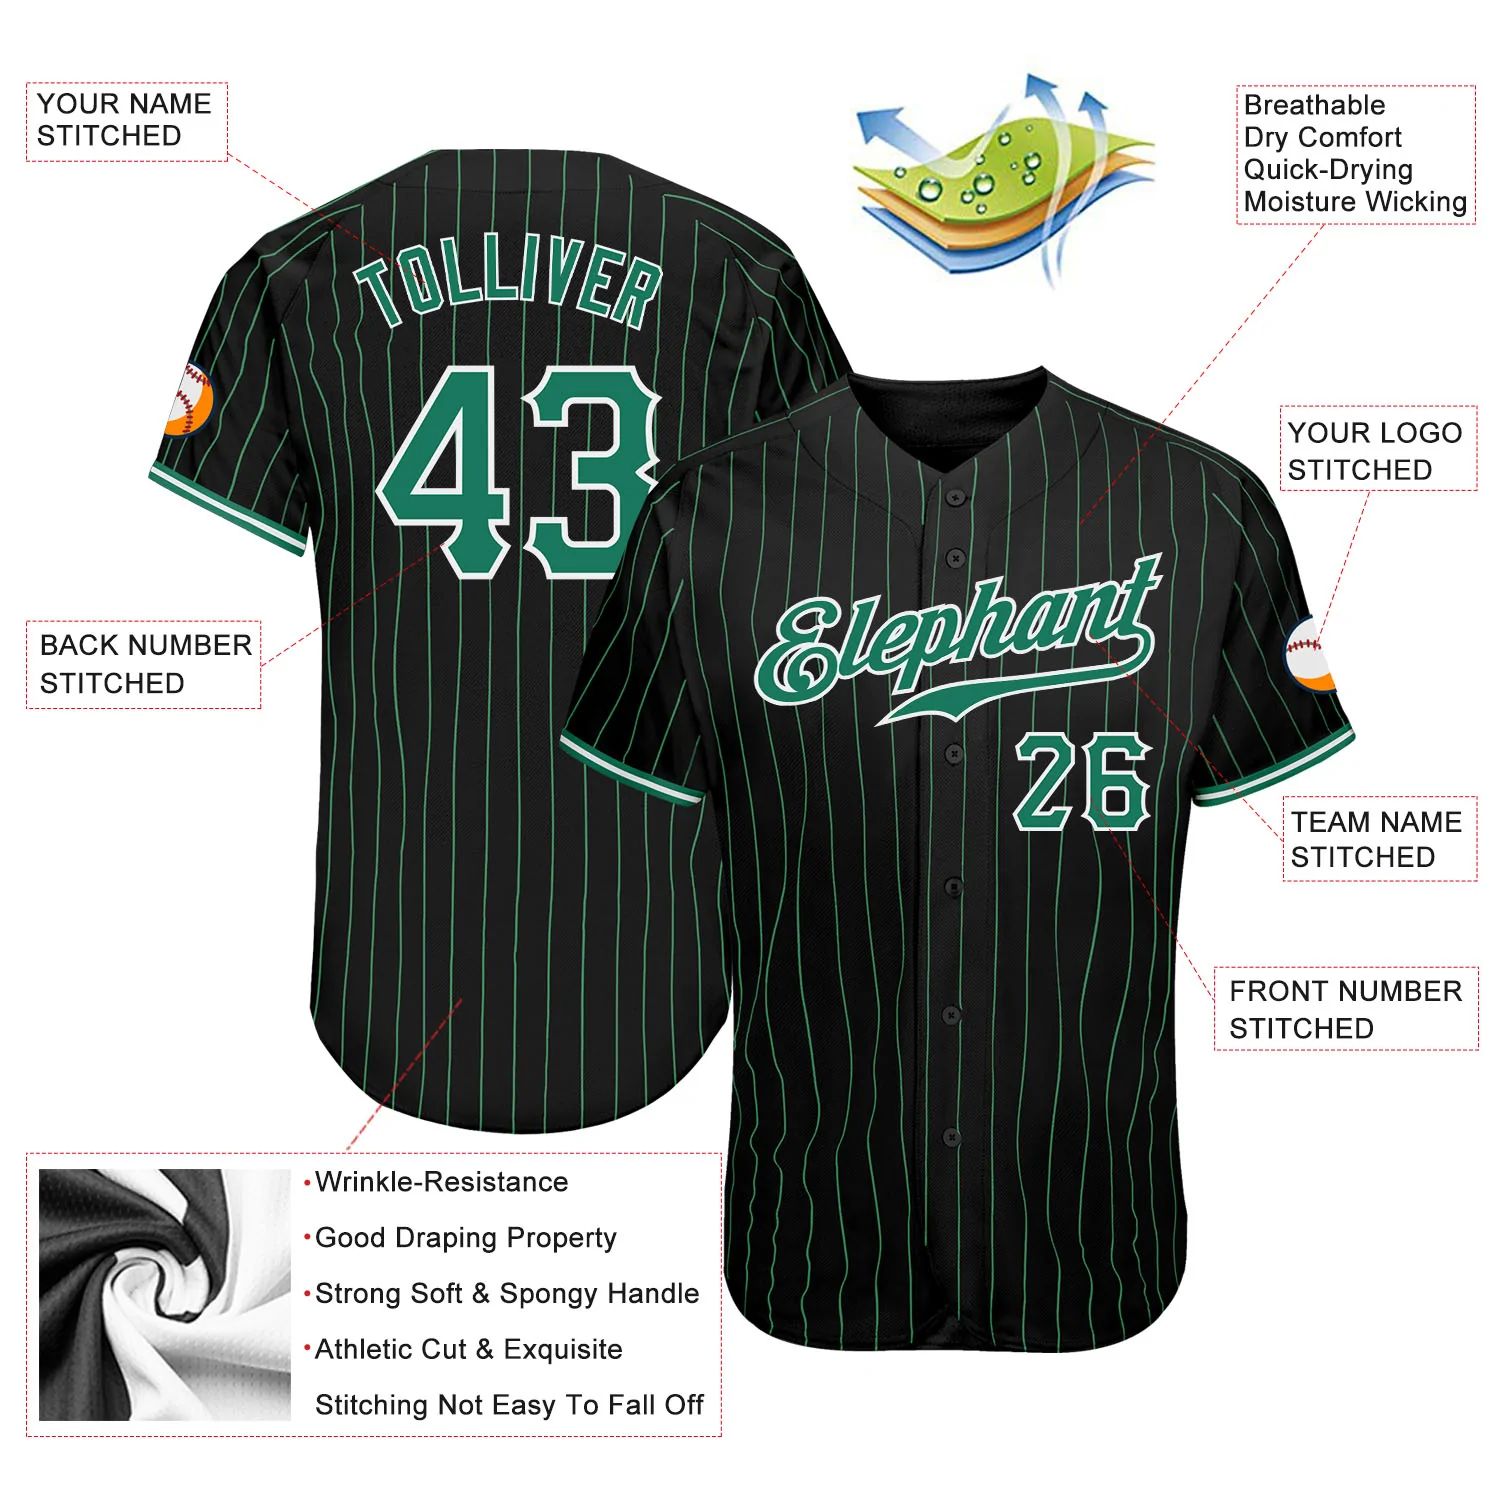 build-white-black-pinstripe-baseball-kelly-green-jersey-authentic-black0380-online-3.jpg